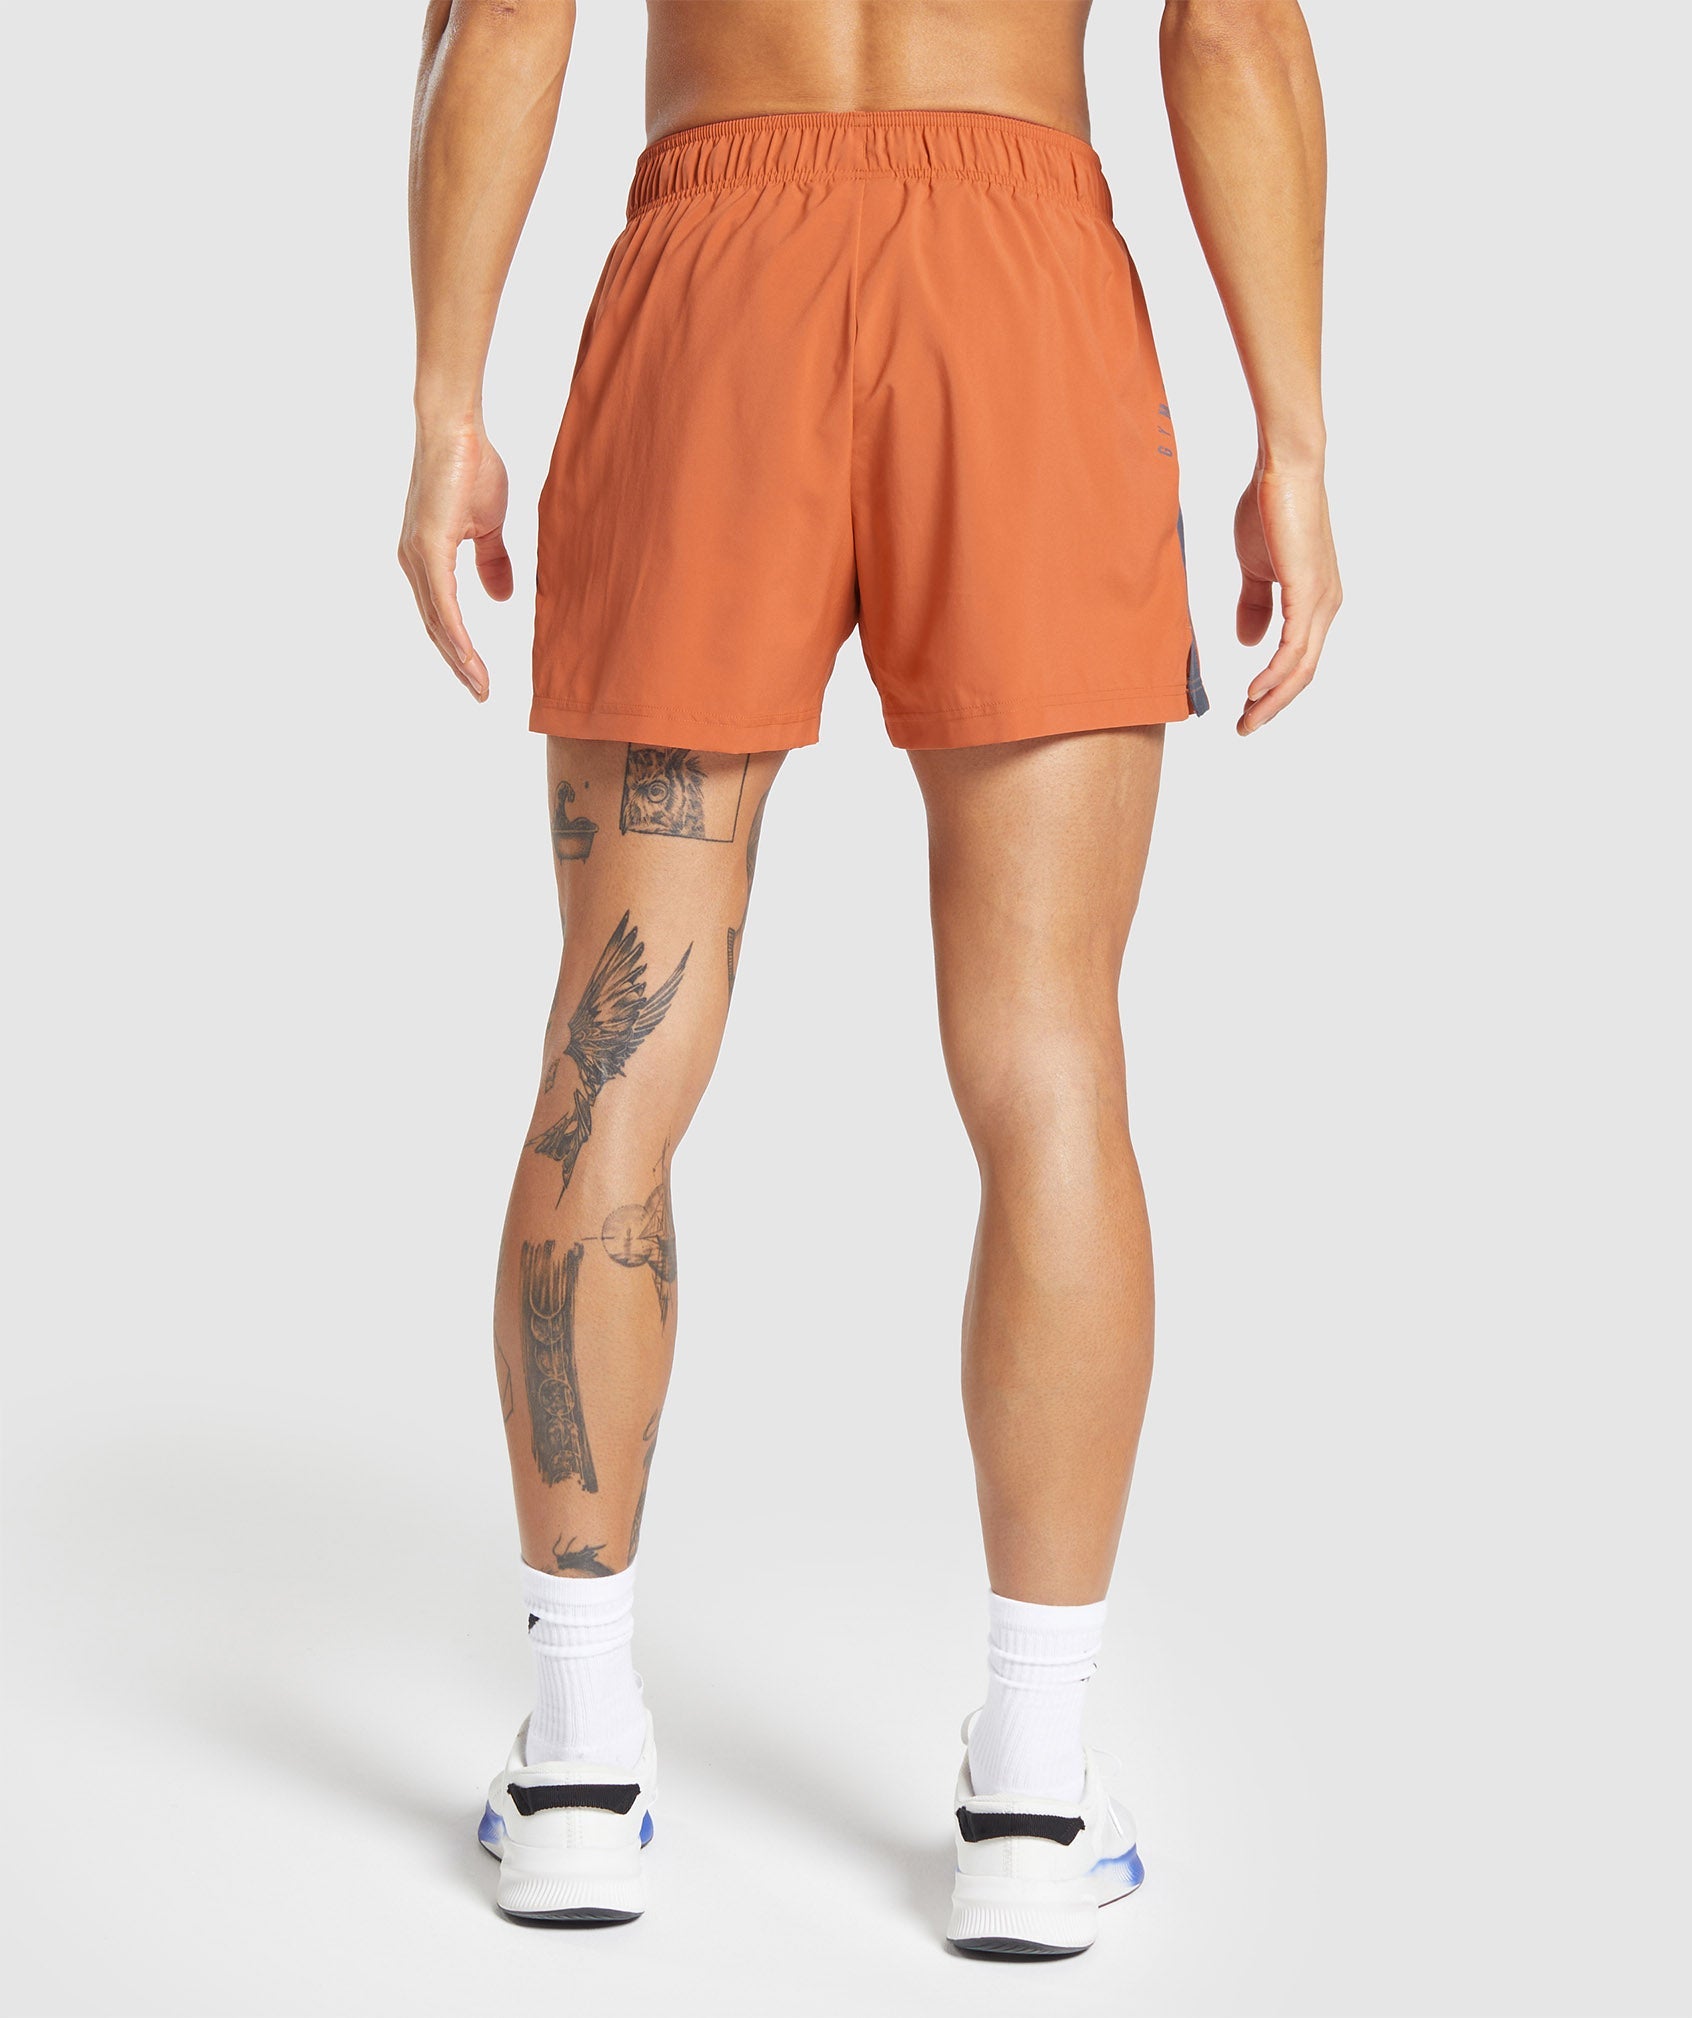 Sport 5" Shorts in Muted Orange/Titanium Blue - view 3